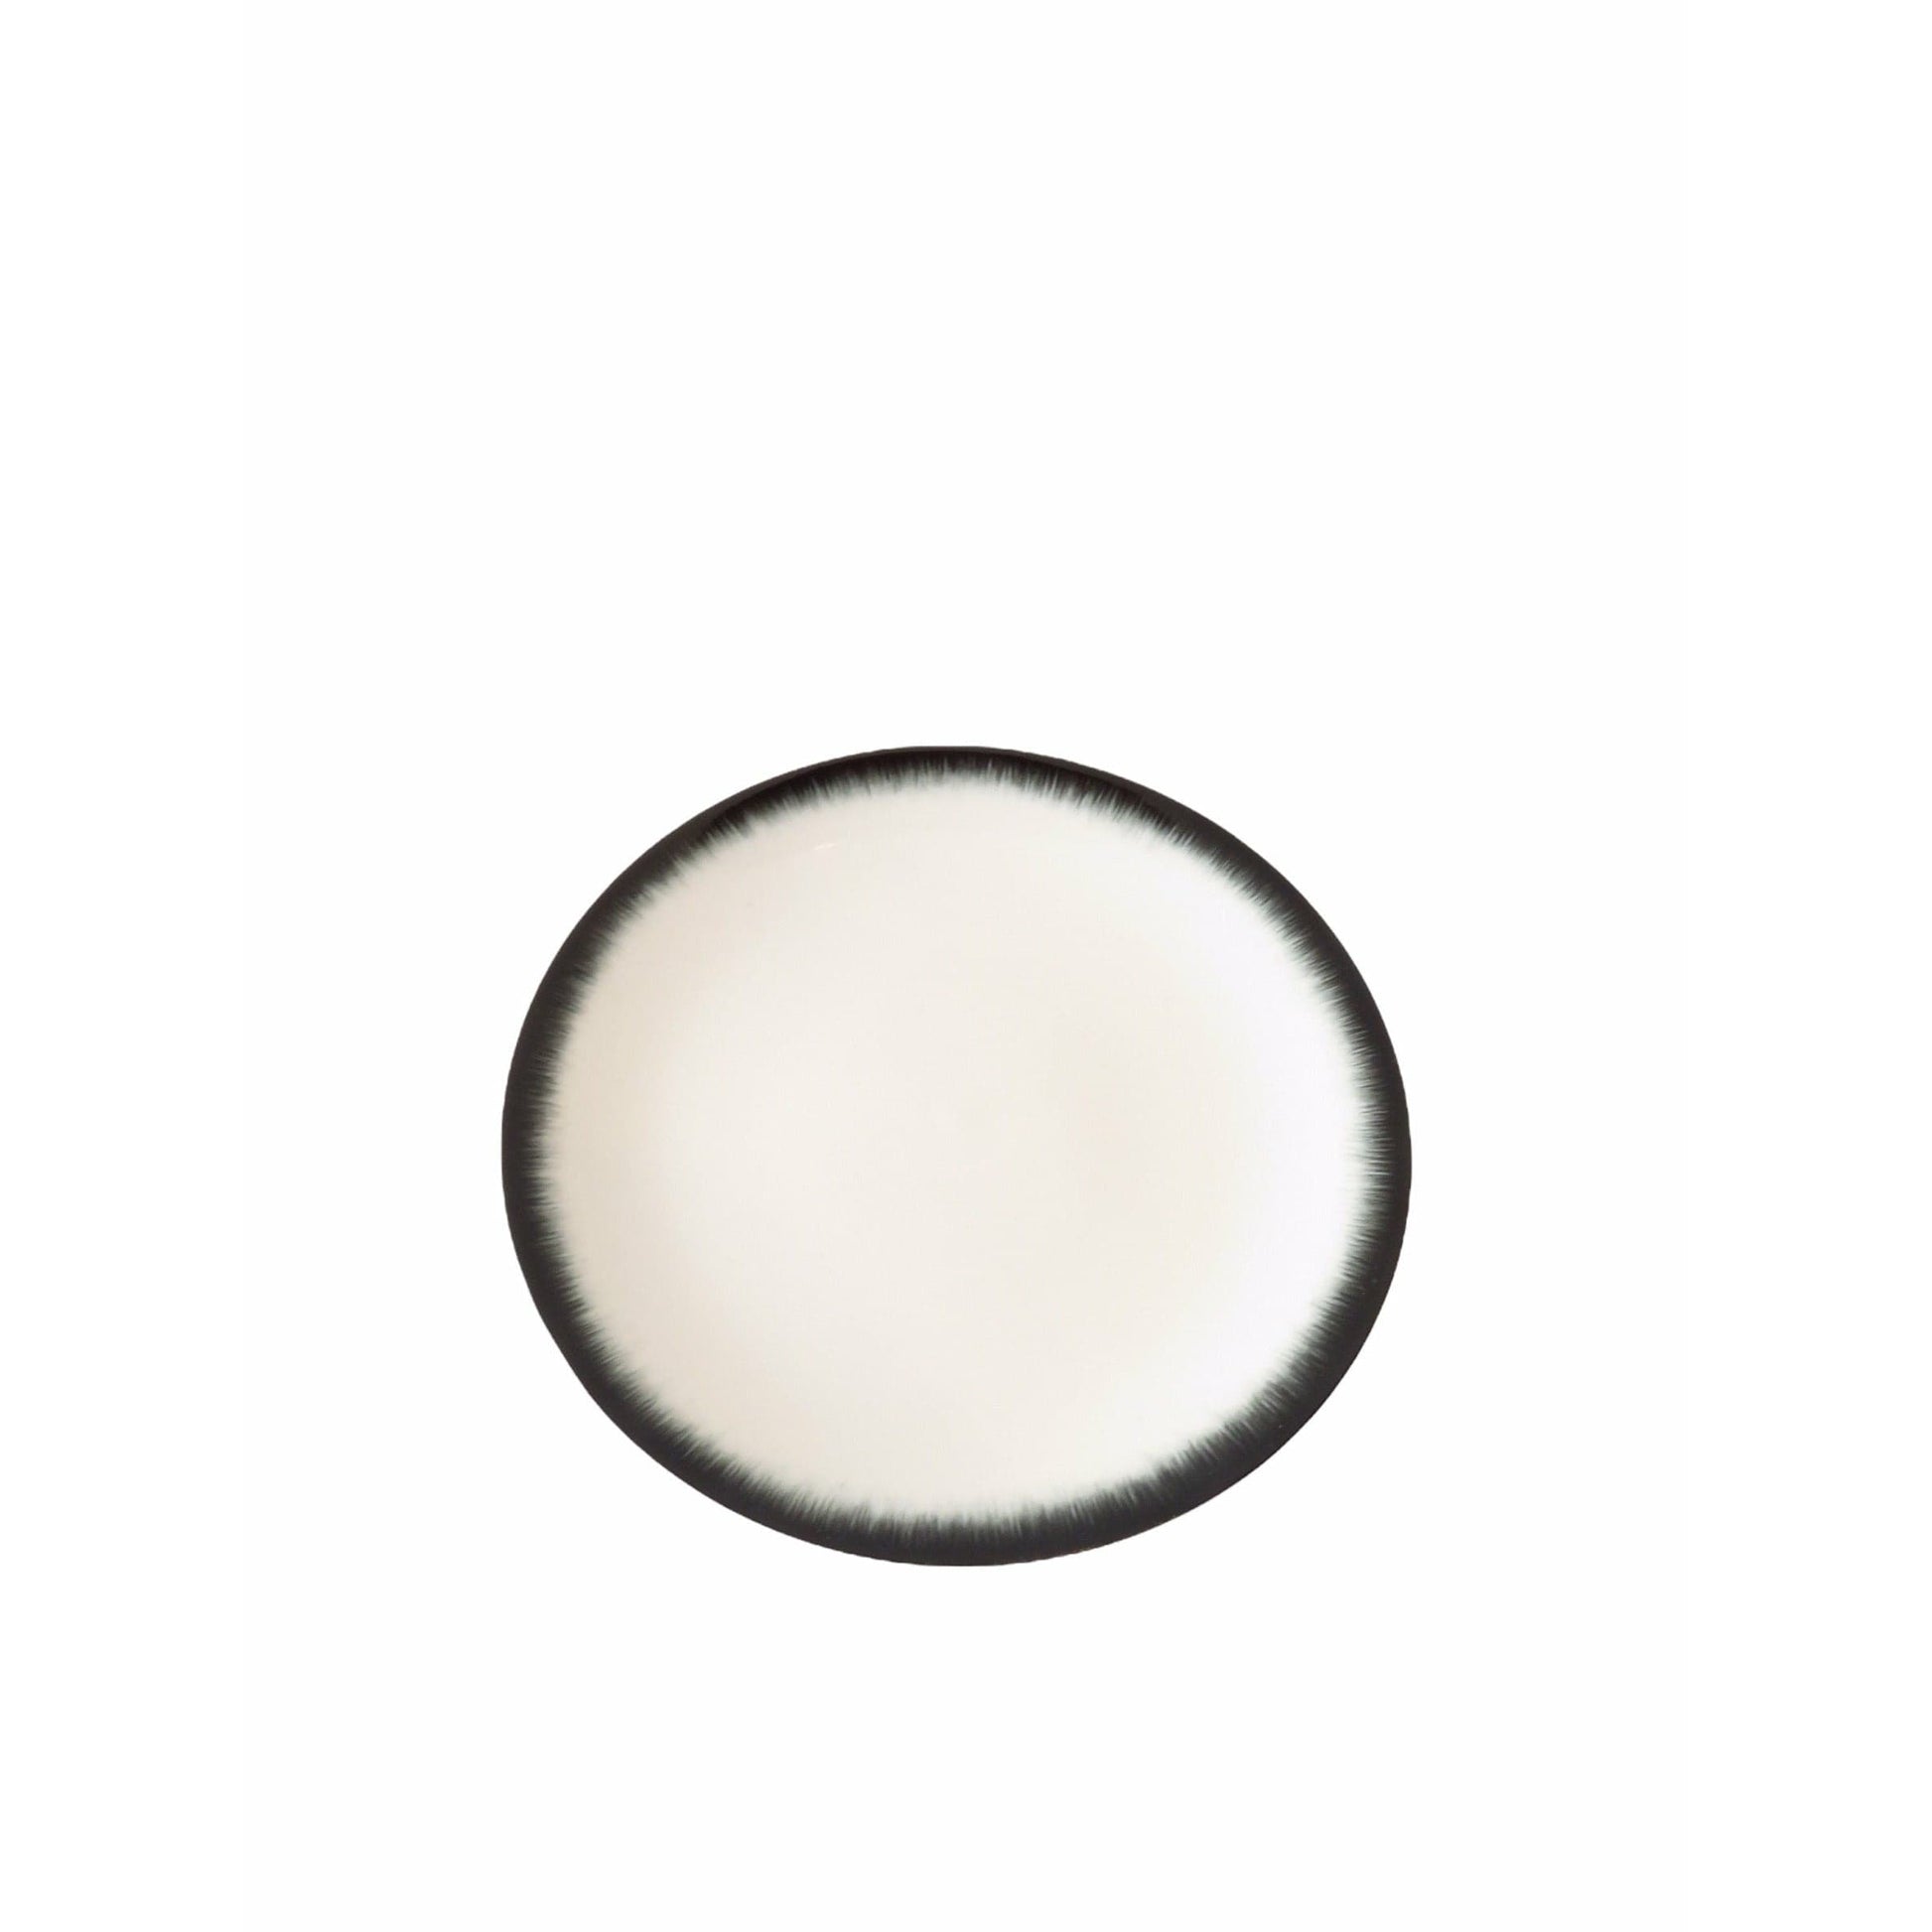 Ann Demeulemeester Home Plate 24 centimeters / Off white & black / Porcelain Ann Demeulemeester for Serax 24 cm plates (set of two)